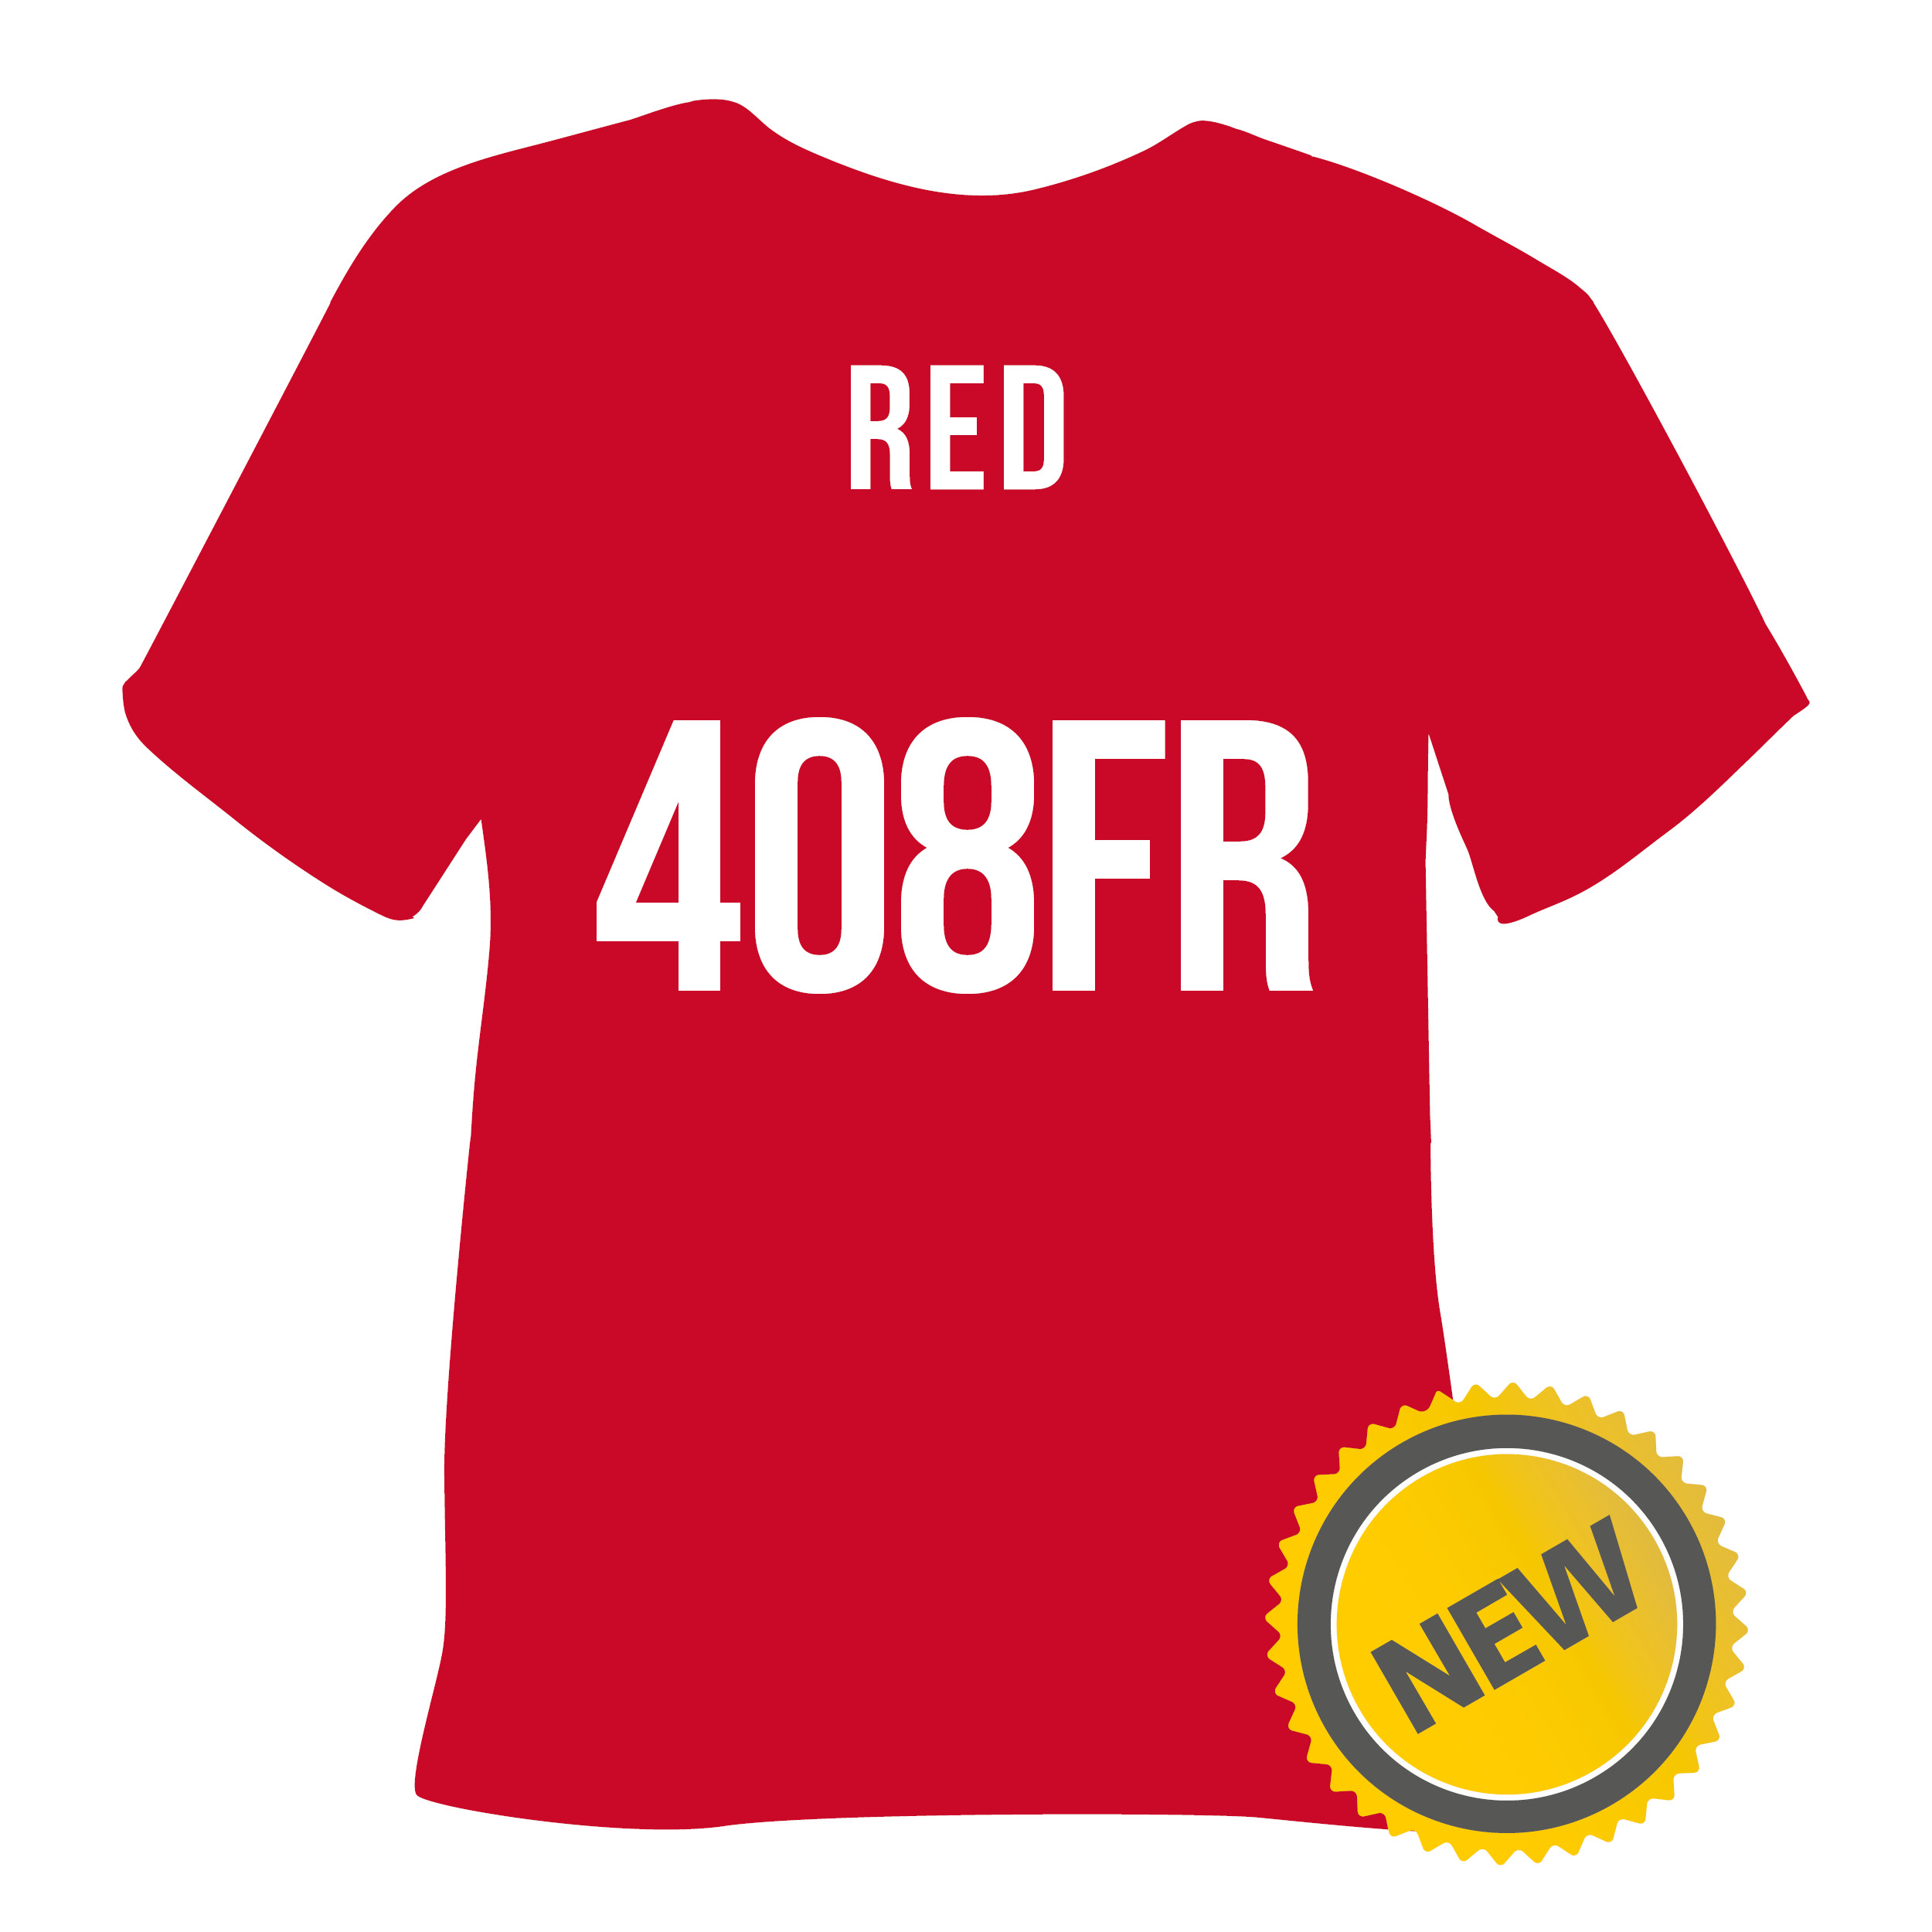 408FR Red